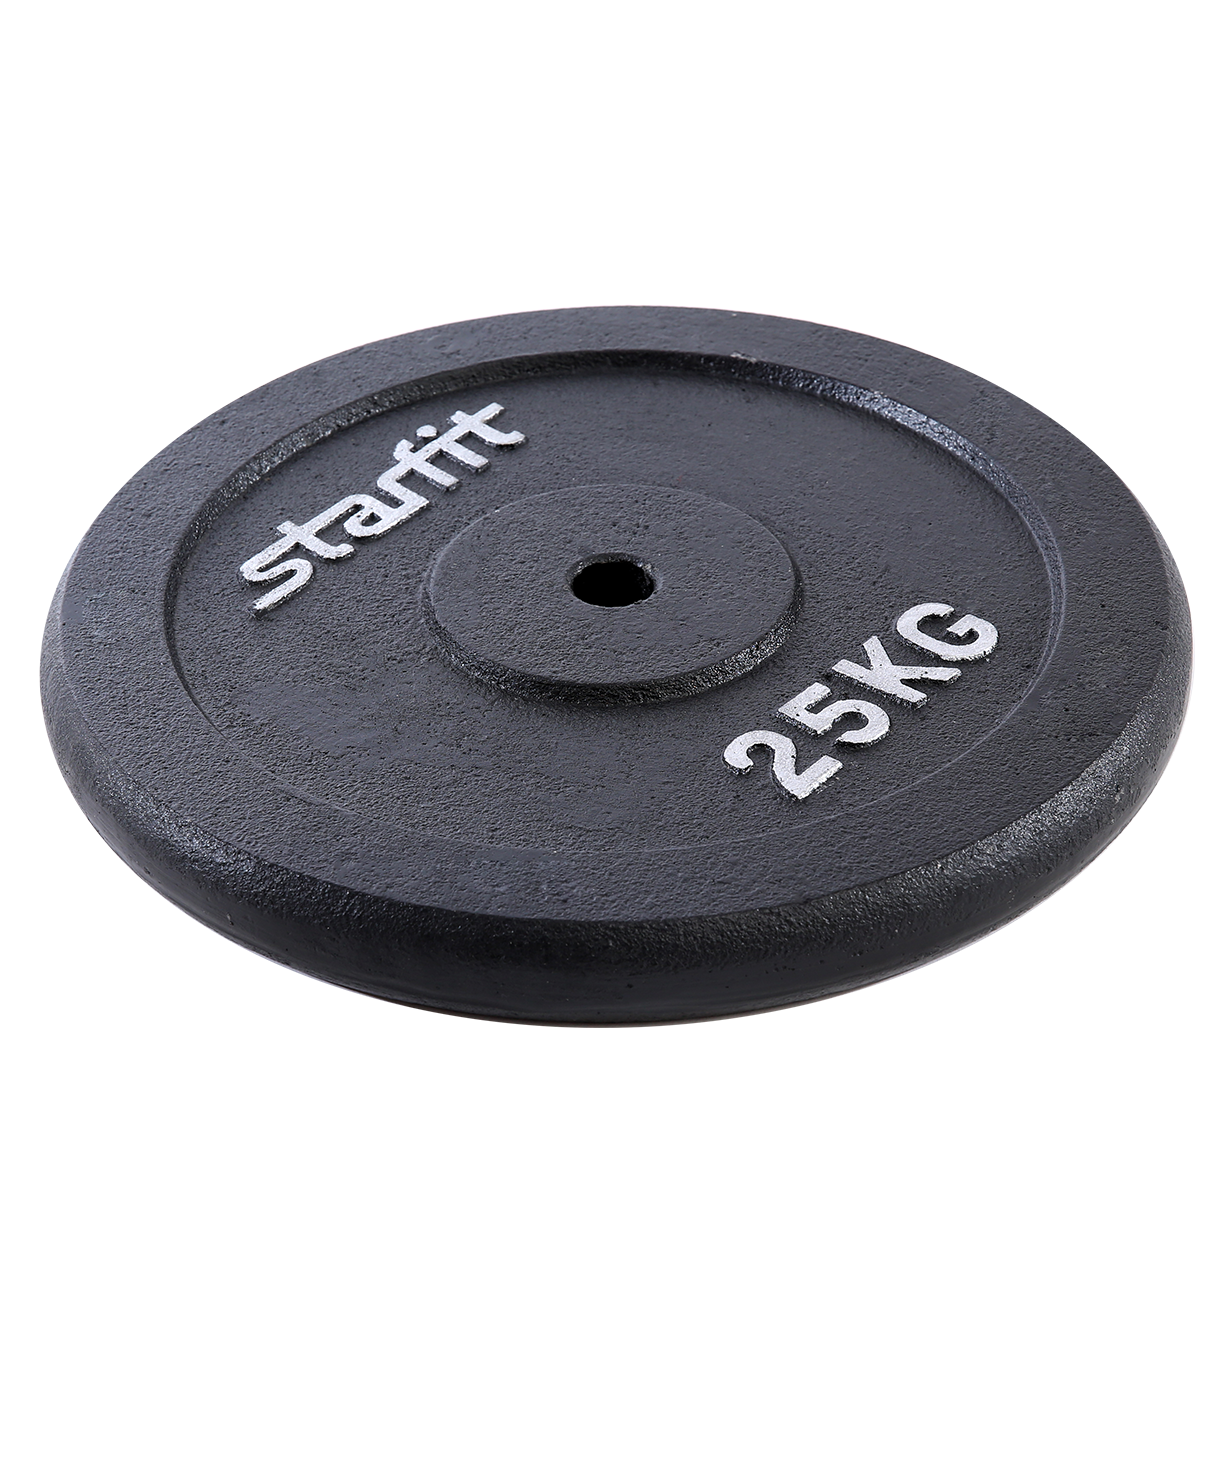 Диск Starfit BB-204 25 кг. Диск Starfit BB-204 1.25 кг. Диск здоровья Starfit fa-204. Диск для штанги Starfit BB-205.